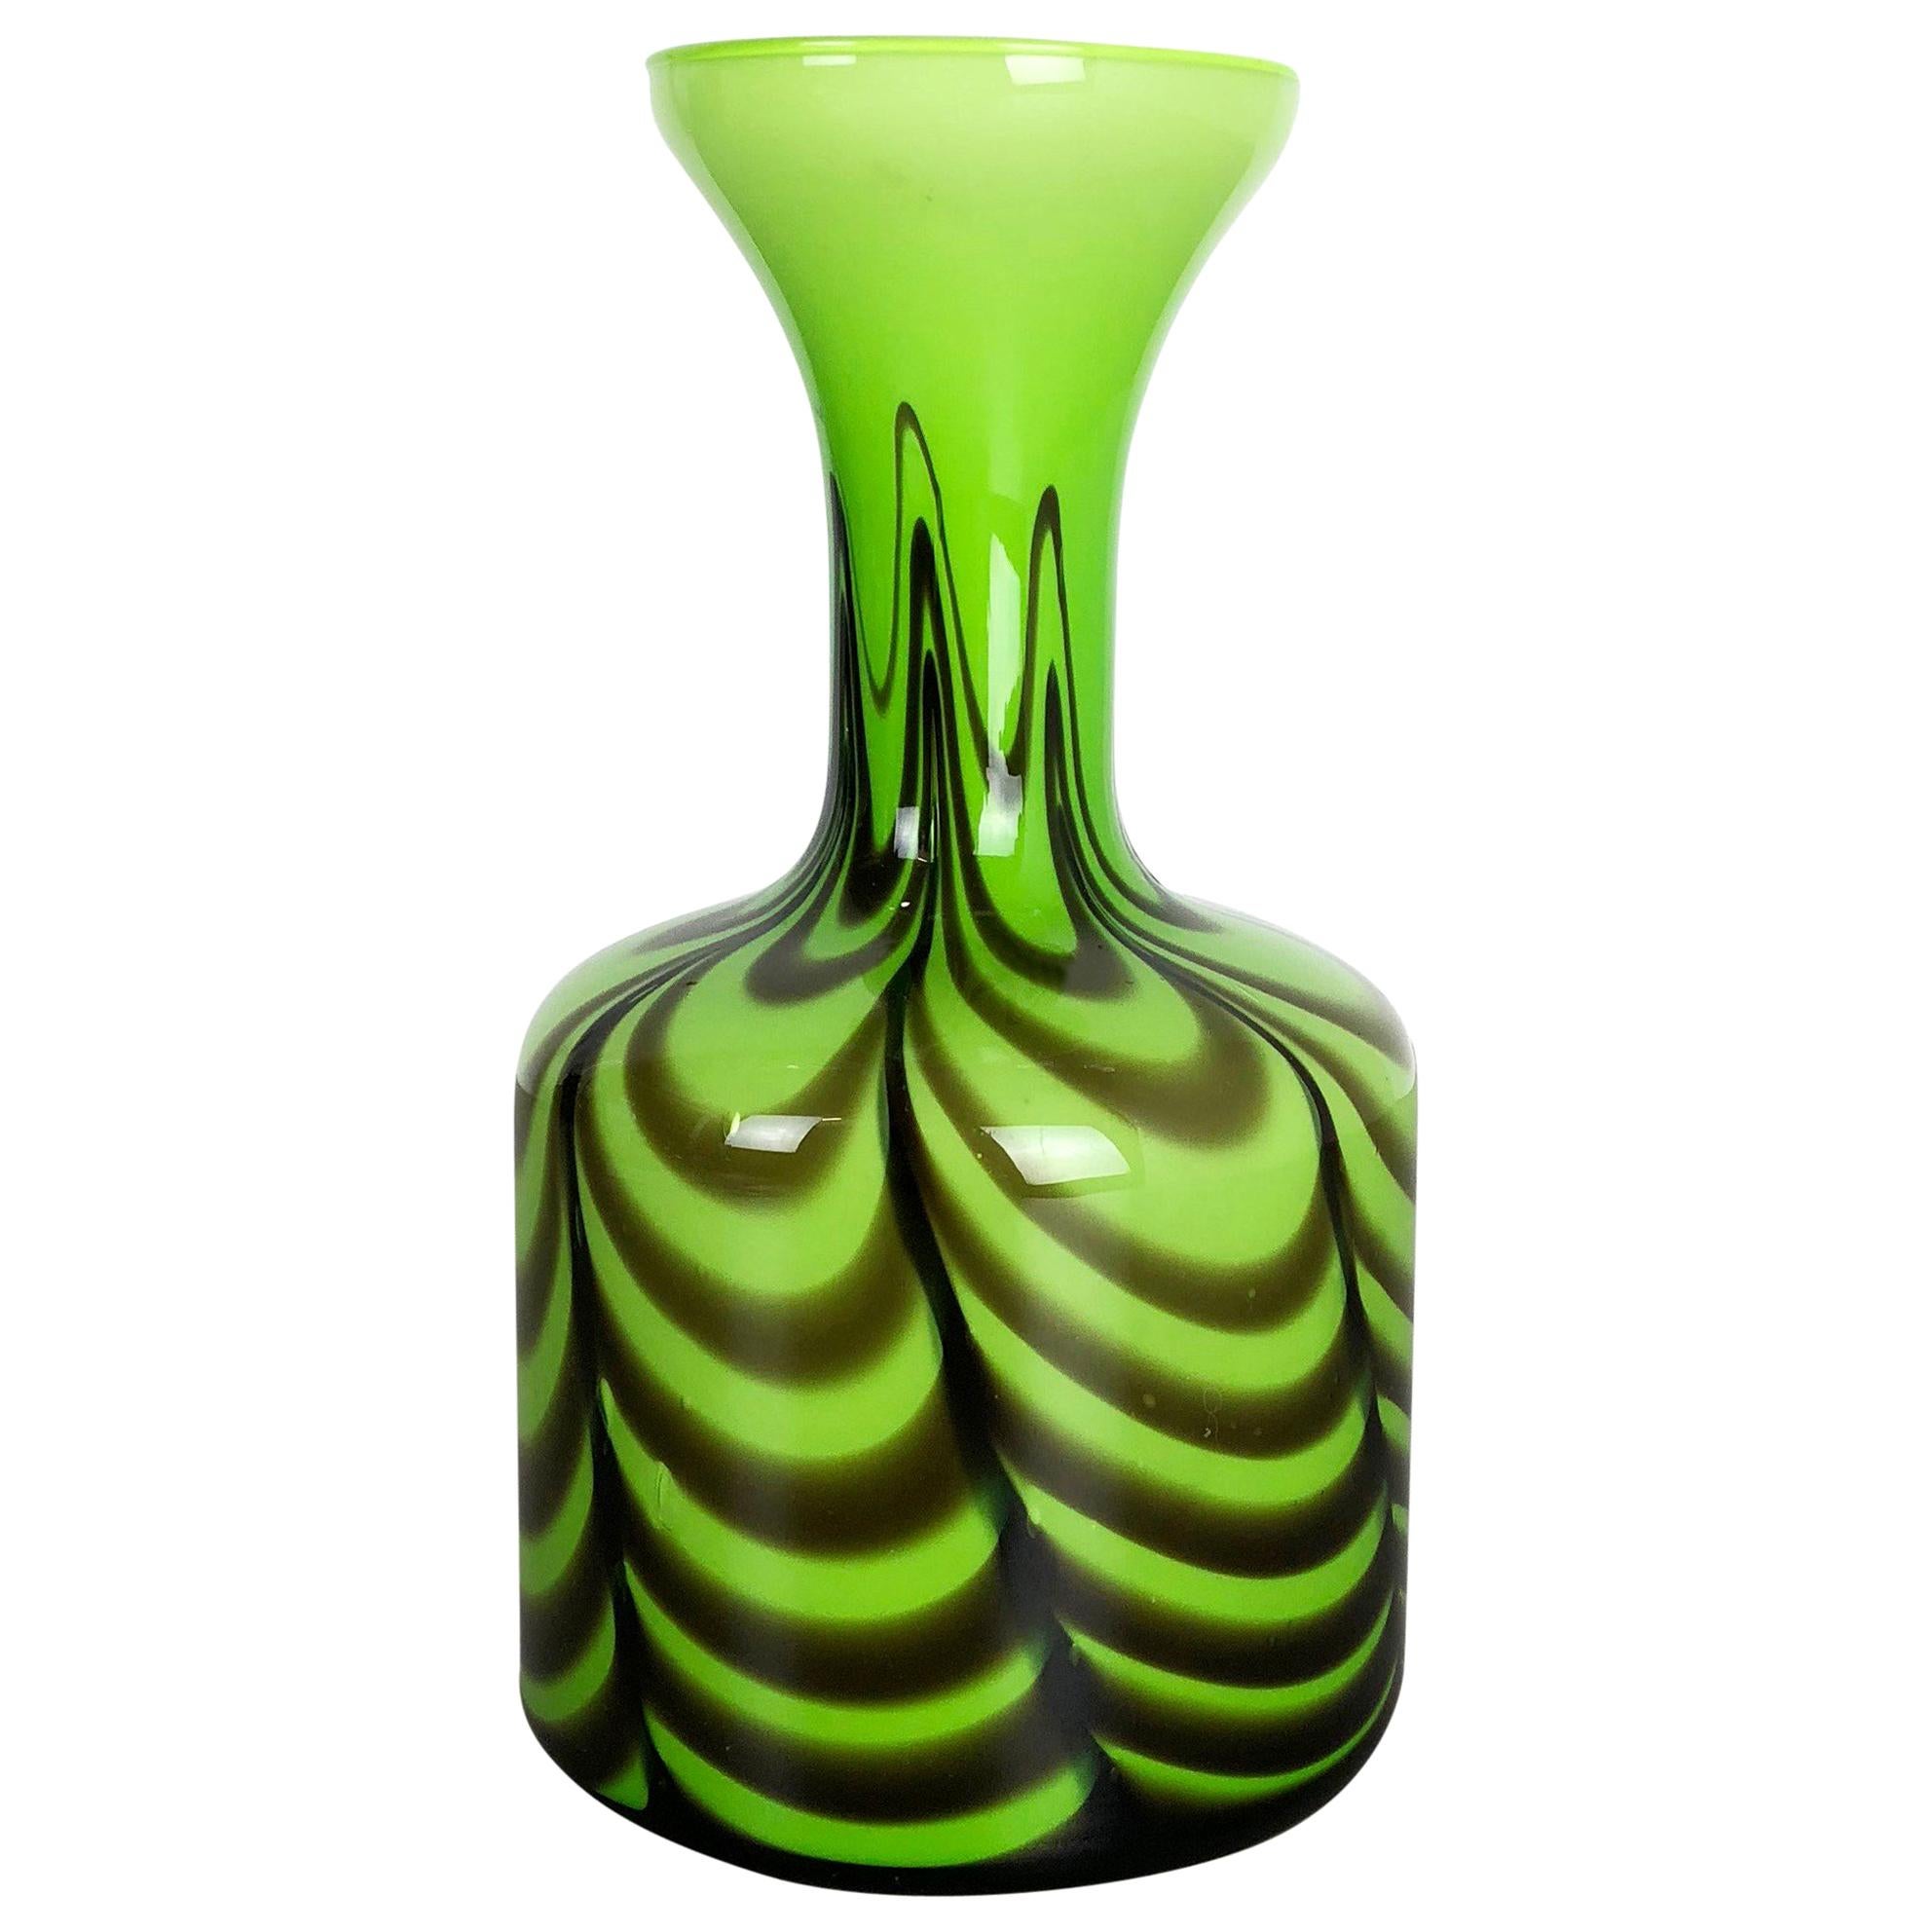 Grand vase Pop Art Florence en opaline verte, Italie, années 1970